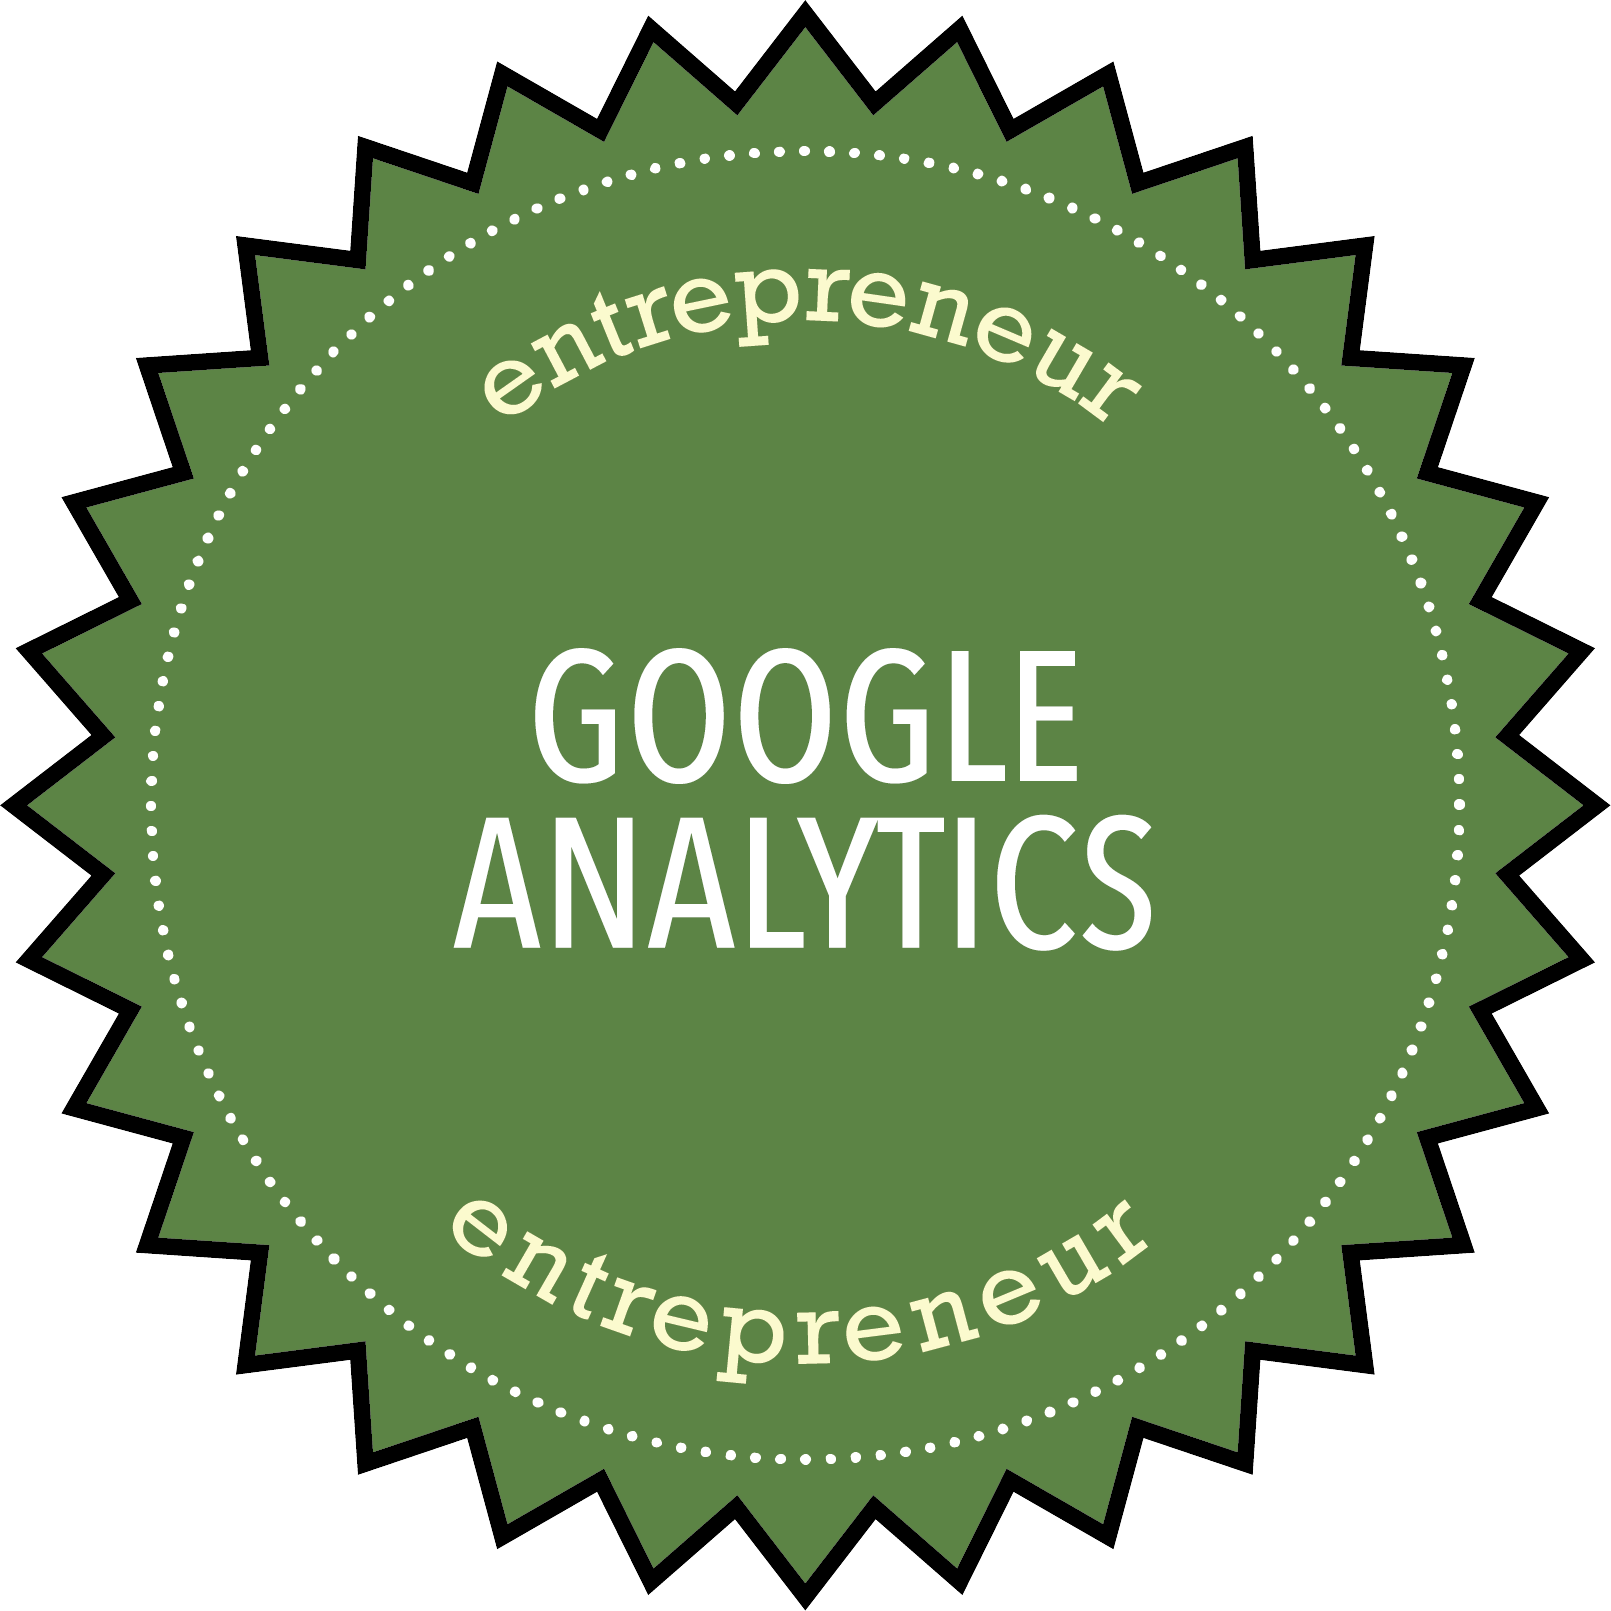 Entrepreneurship: Google Analytics